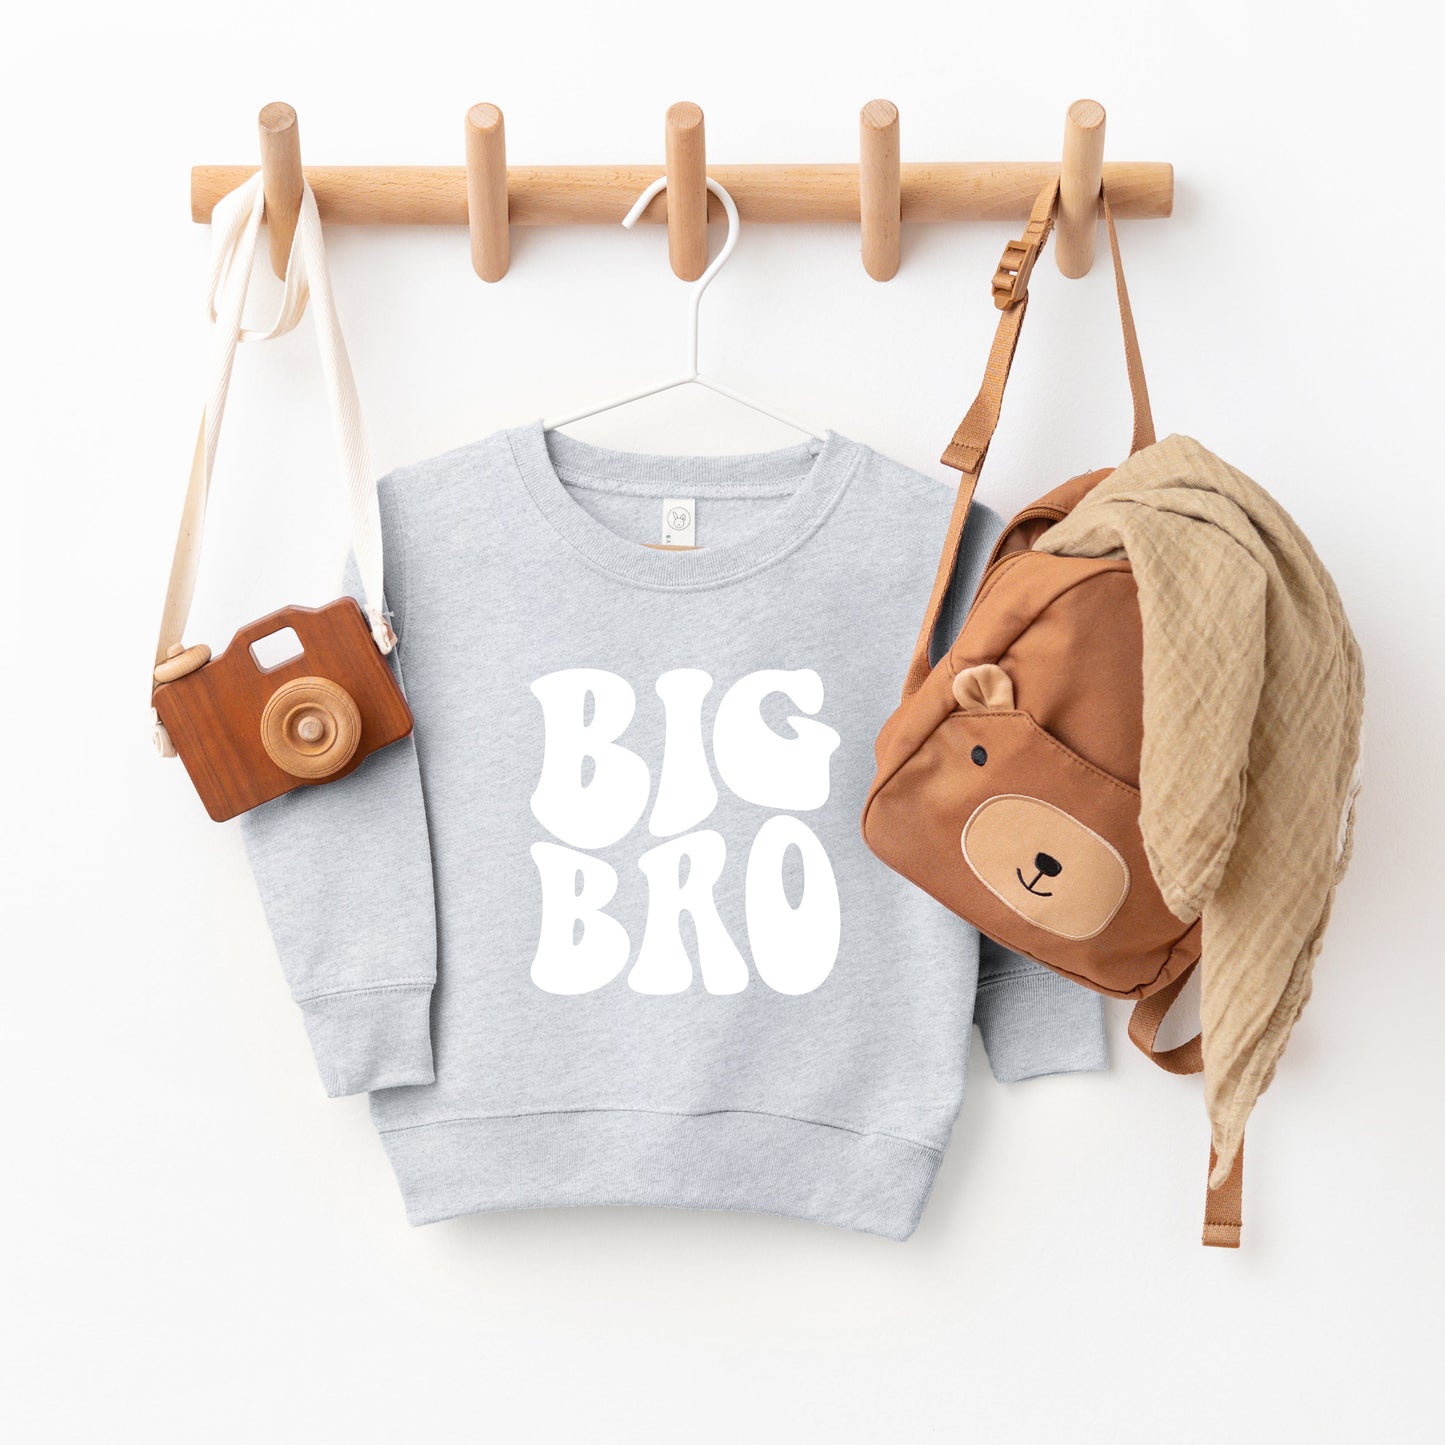 Big Bro Wavy | Toddler Graphic Sweatshirt